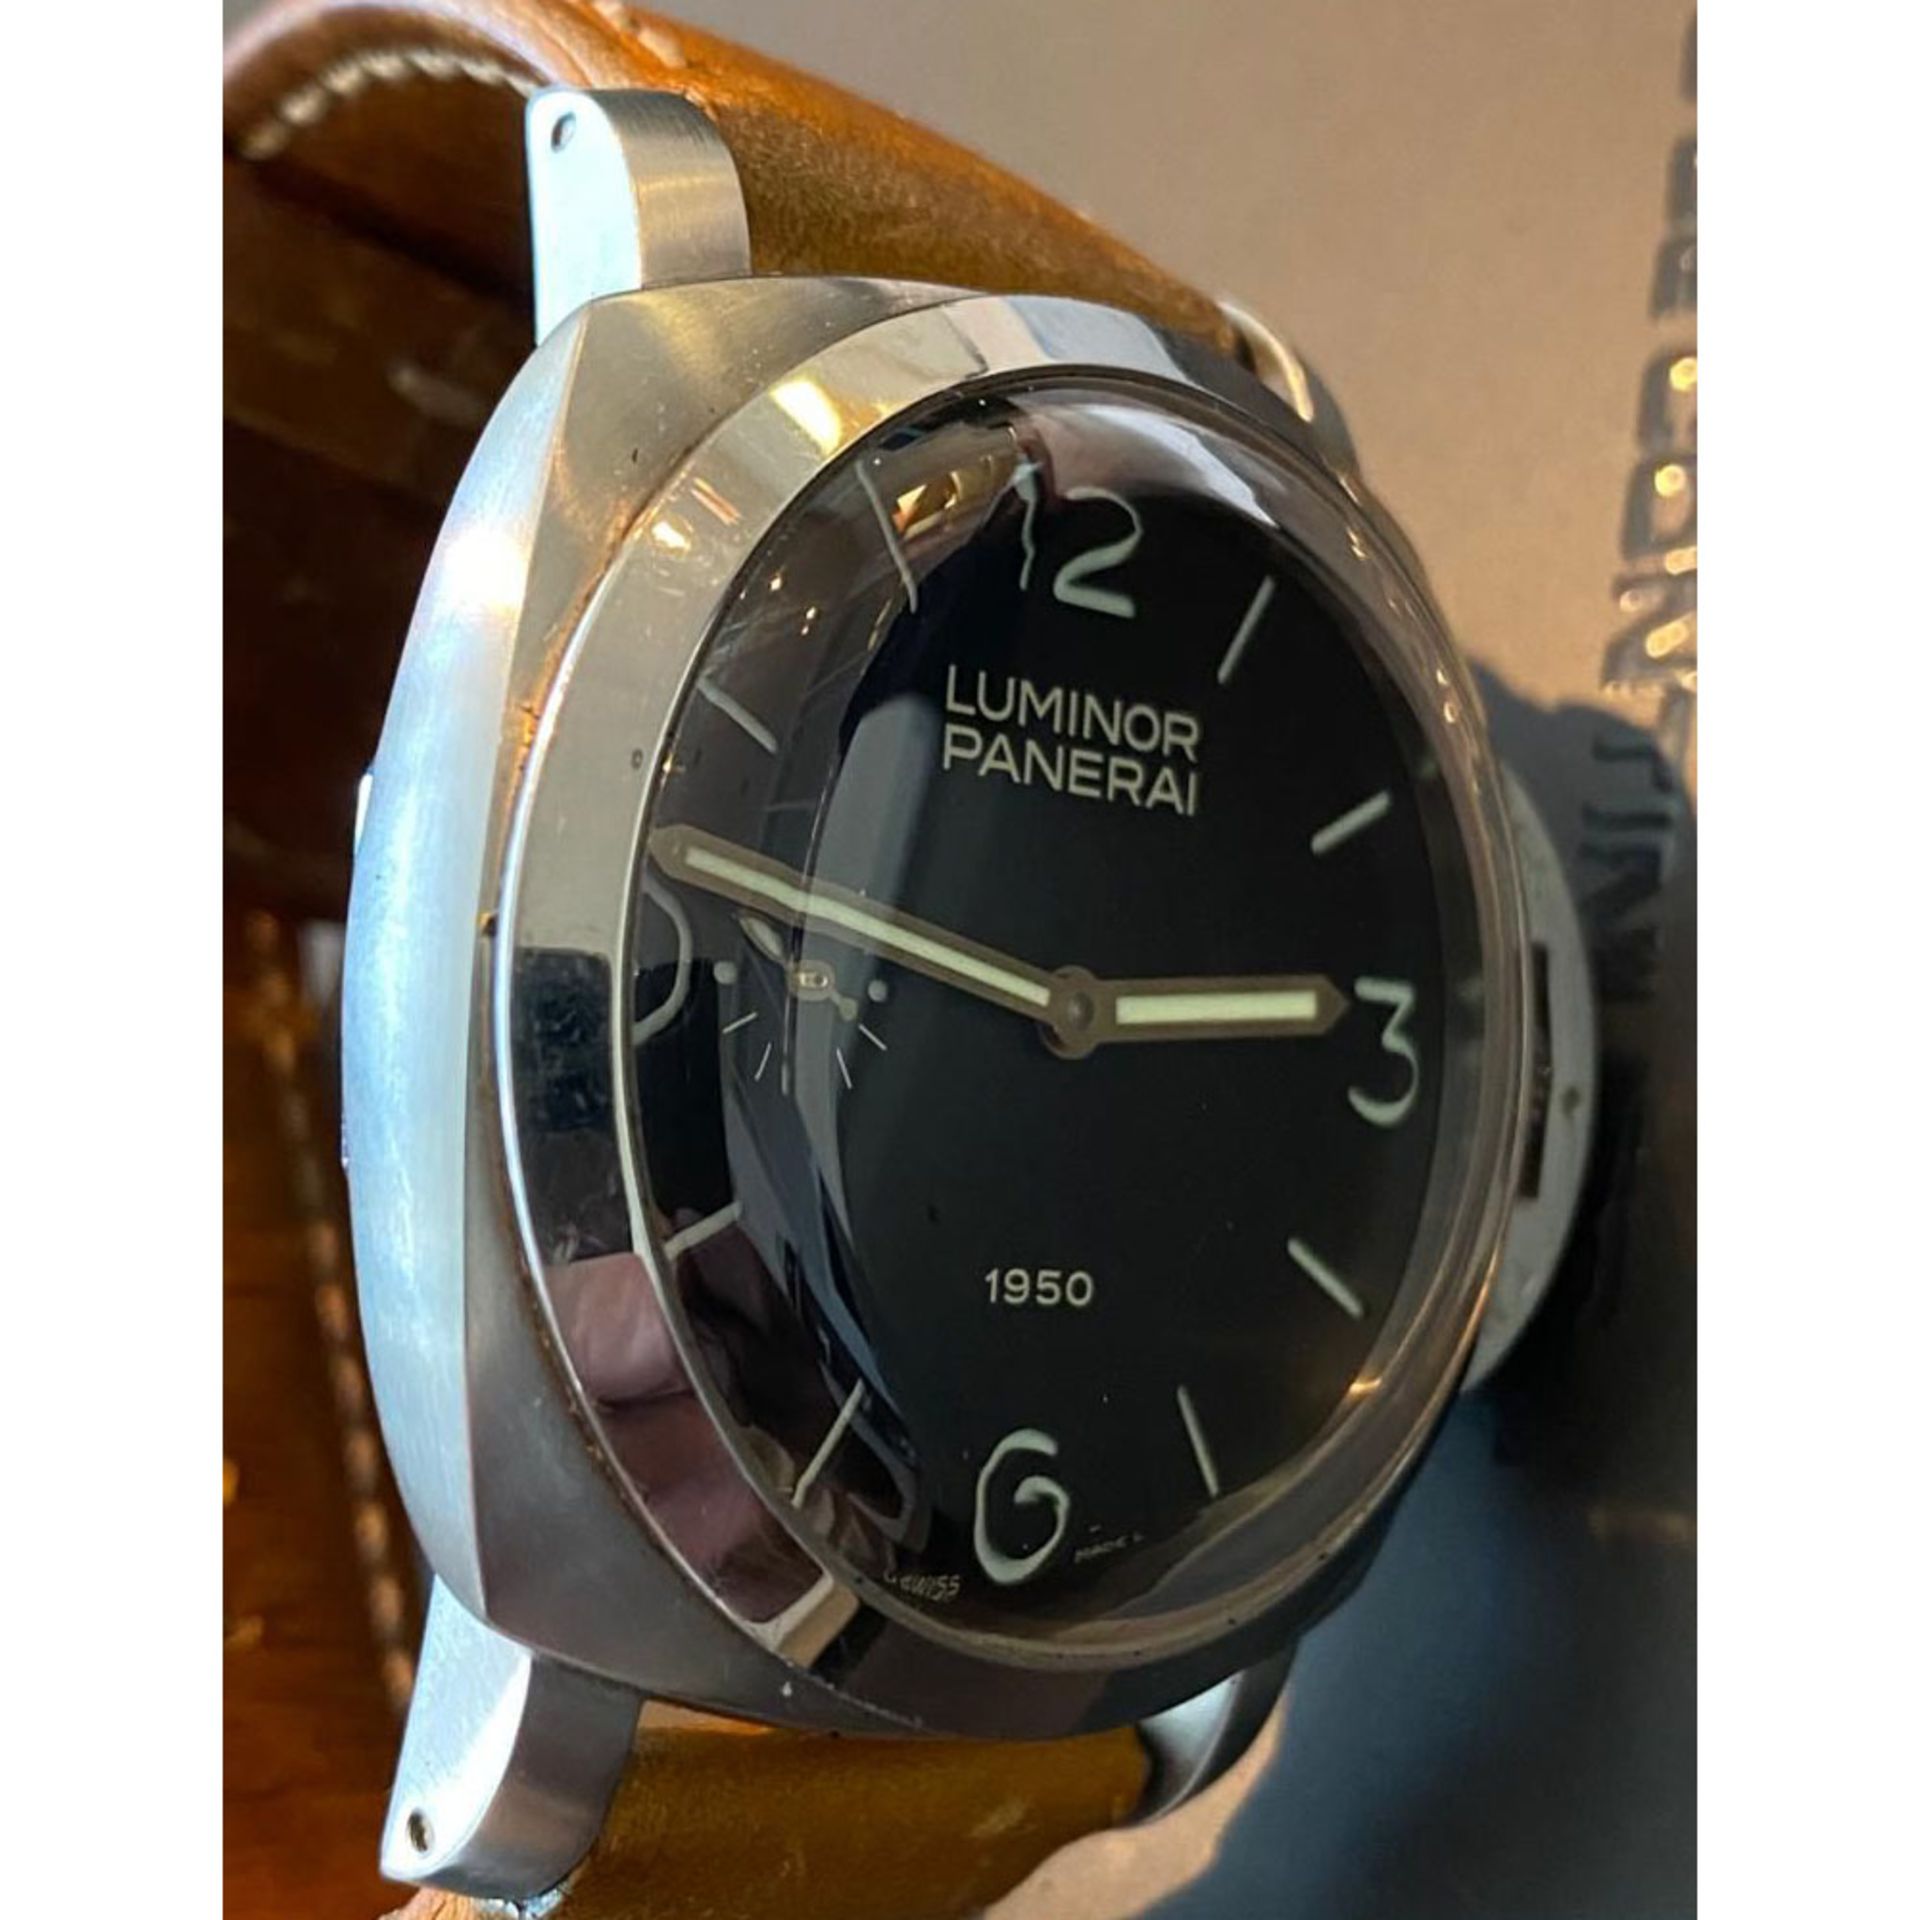 Panerai Luminor 1950 47 mm Hand-wound Mechanical Watch - Image 4 of 6